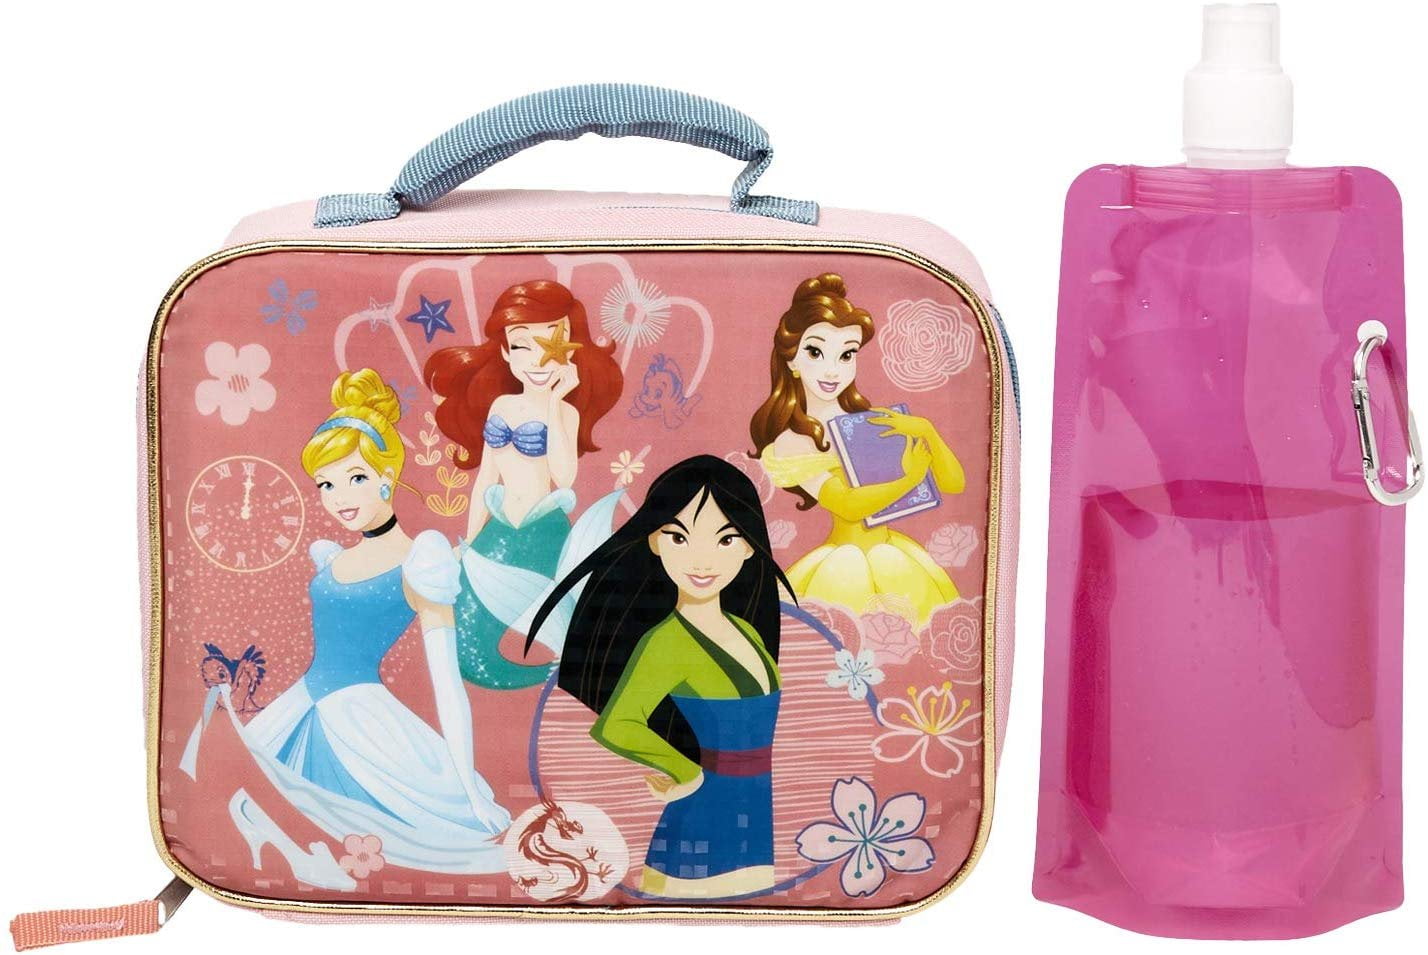 Disney Princess Disney Princess Blue & Pink Lunch Box